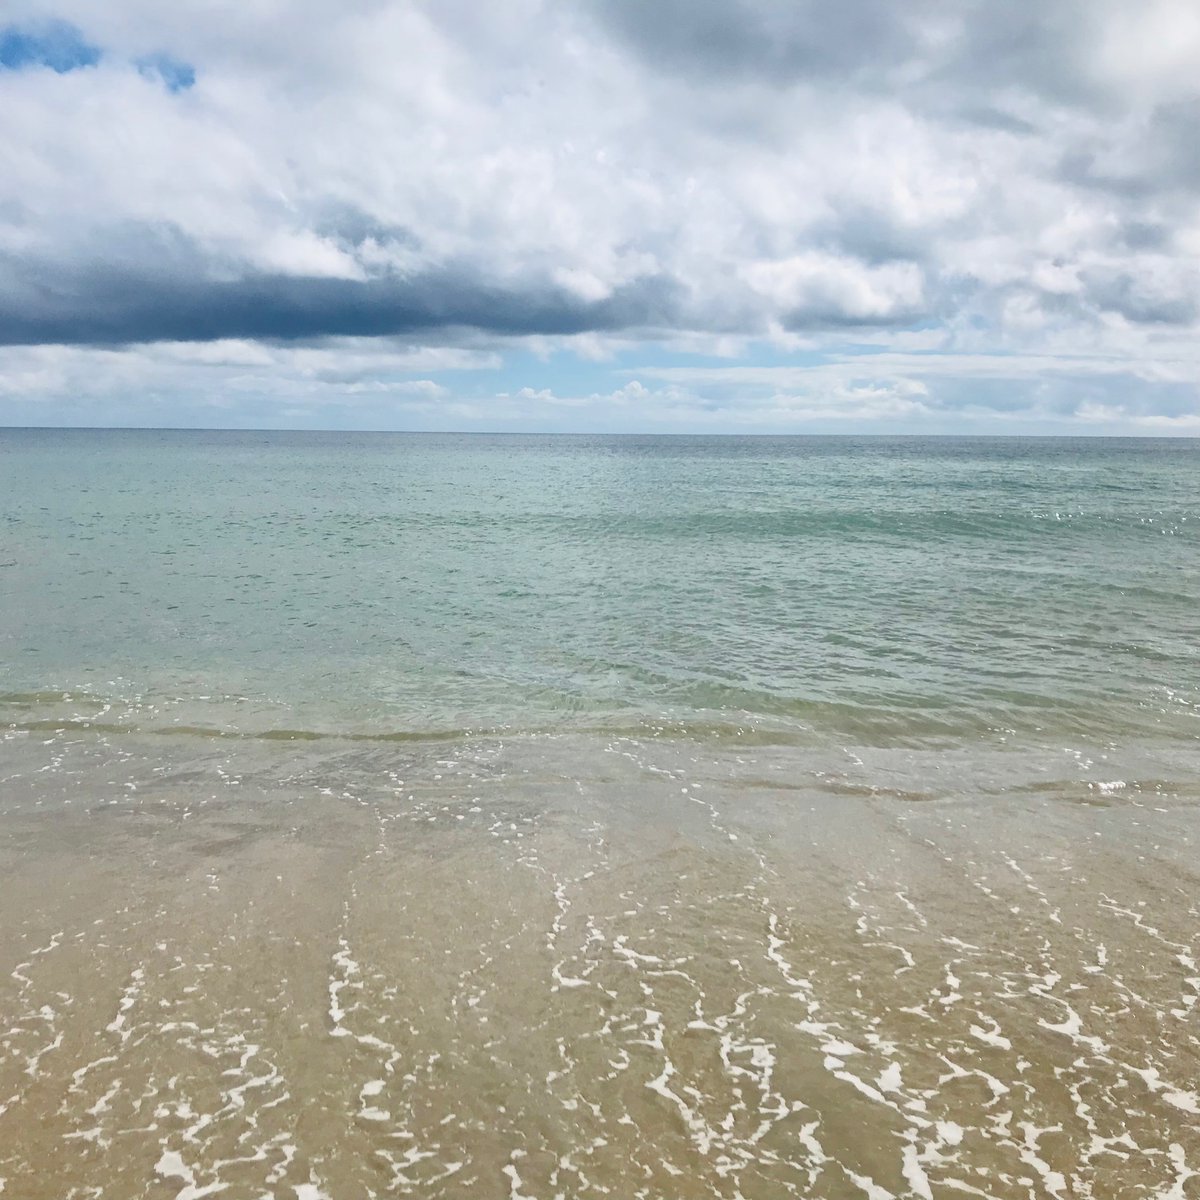 Glas (Cornish): sea blue

And like an oil painting 

#Cornwall #seaswimming